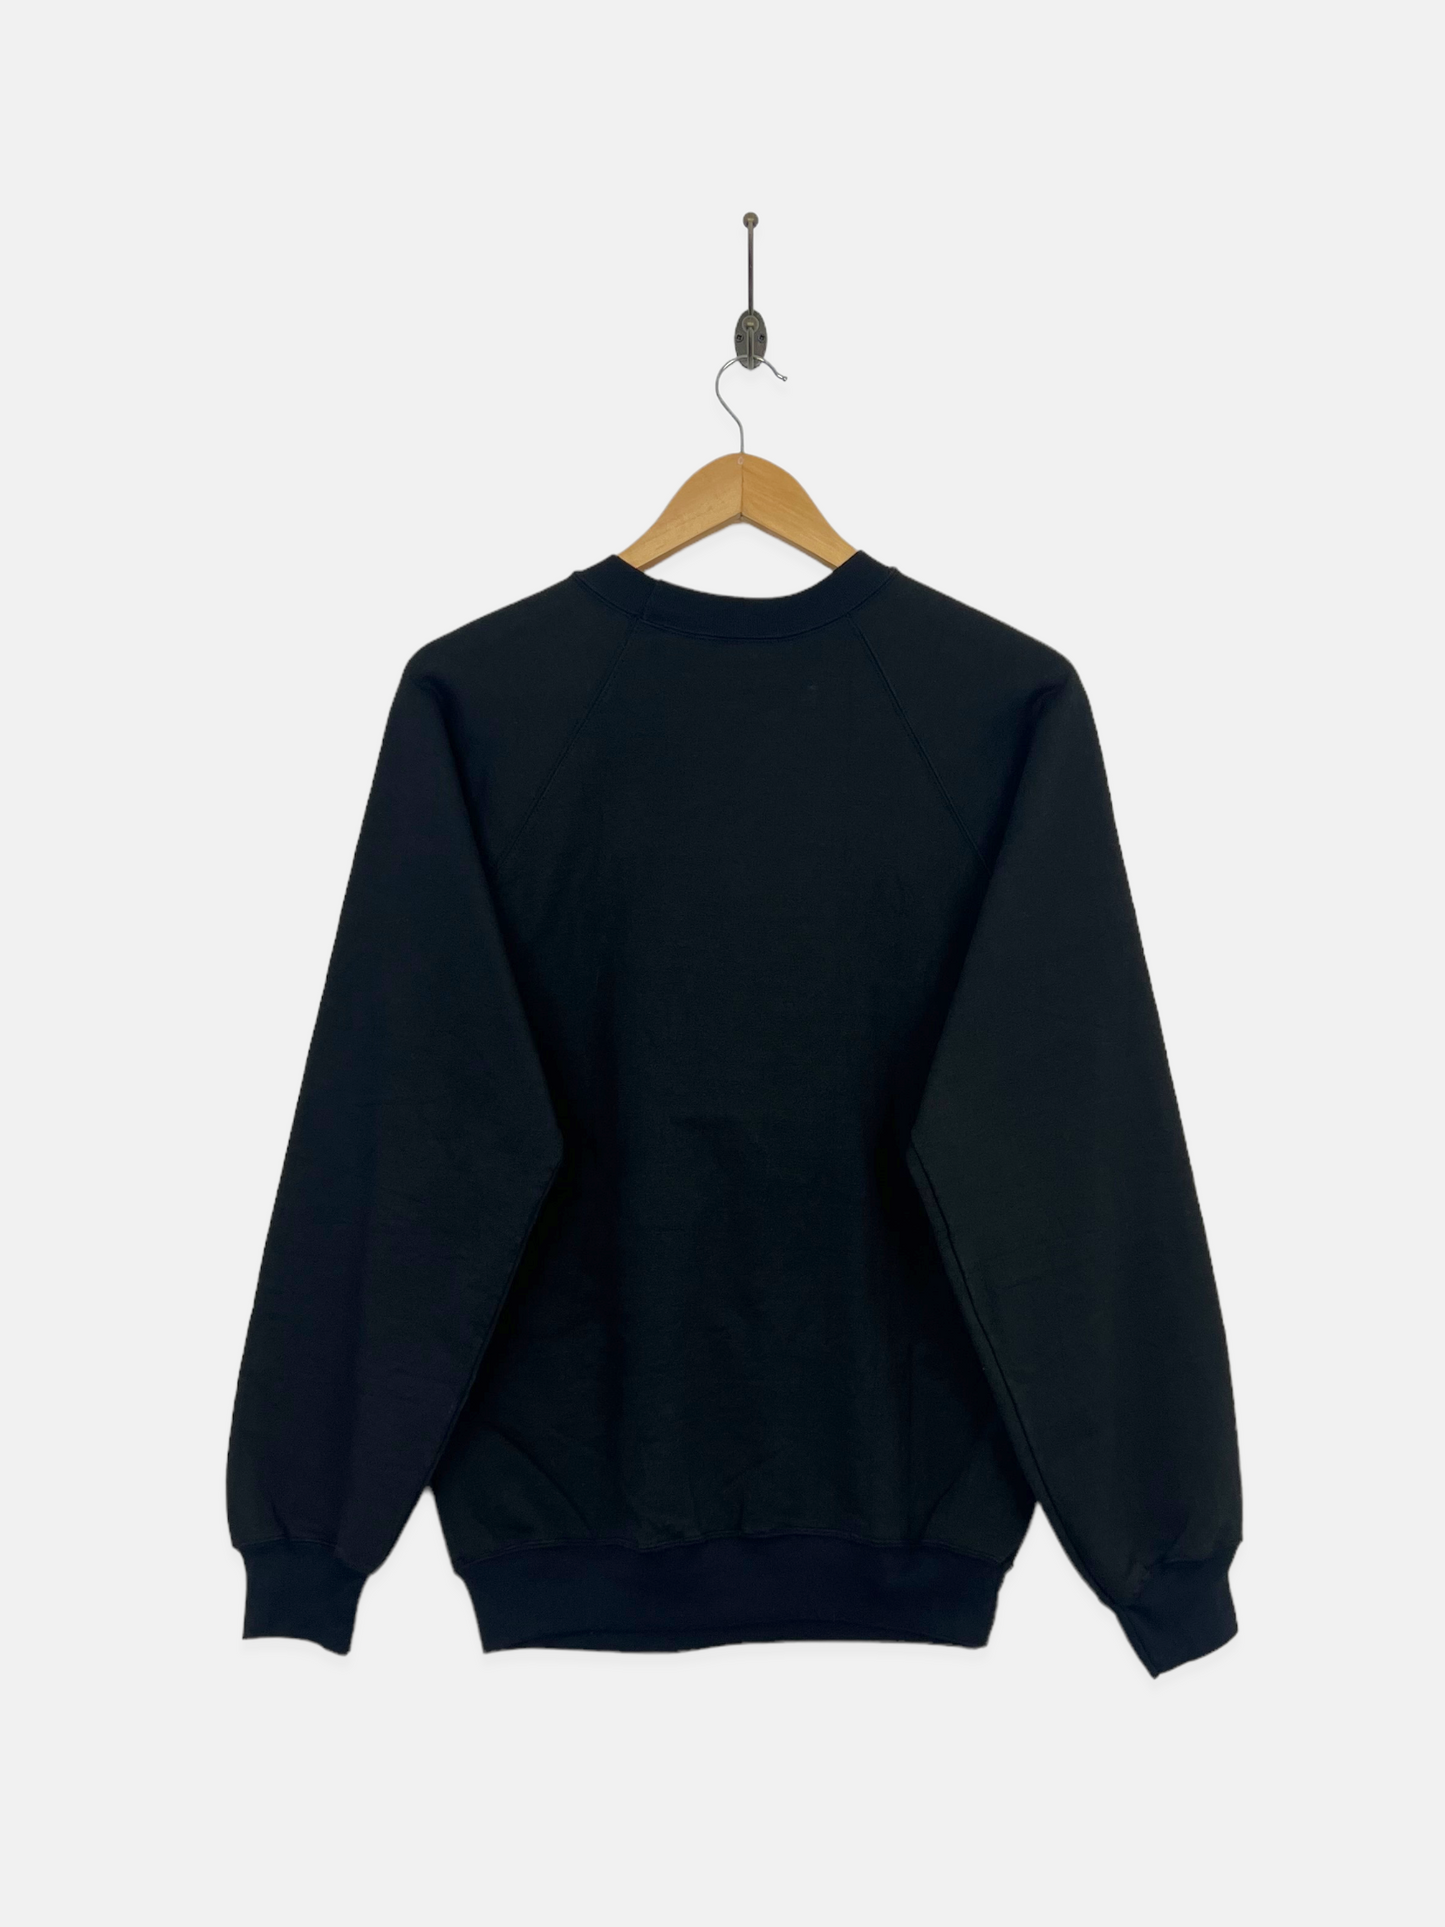 90's Hard Rock Cafe Sydney AUS Made Embroidered Vintage Sweatshirt Size 8